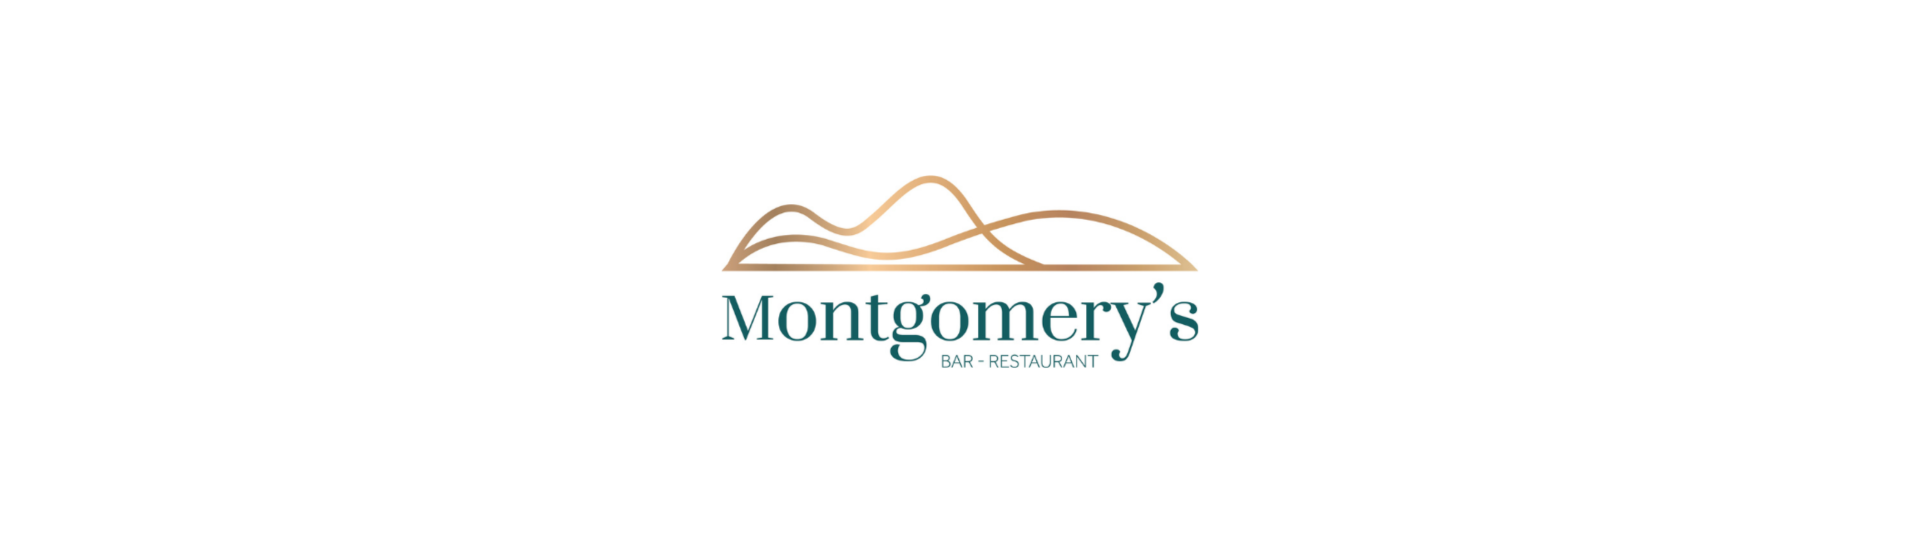 Montgomery's Bar & Restaurant Logo